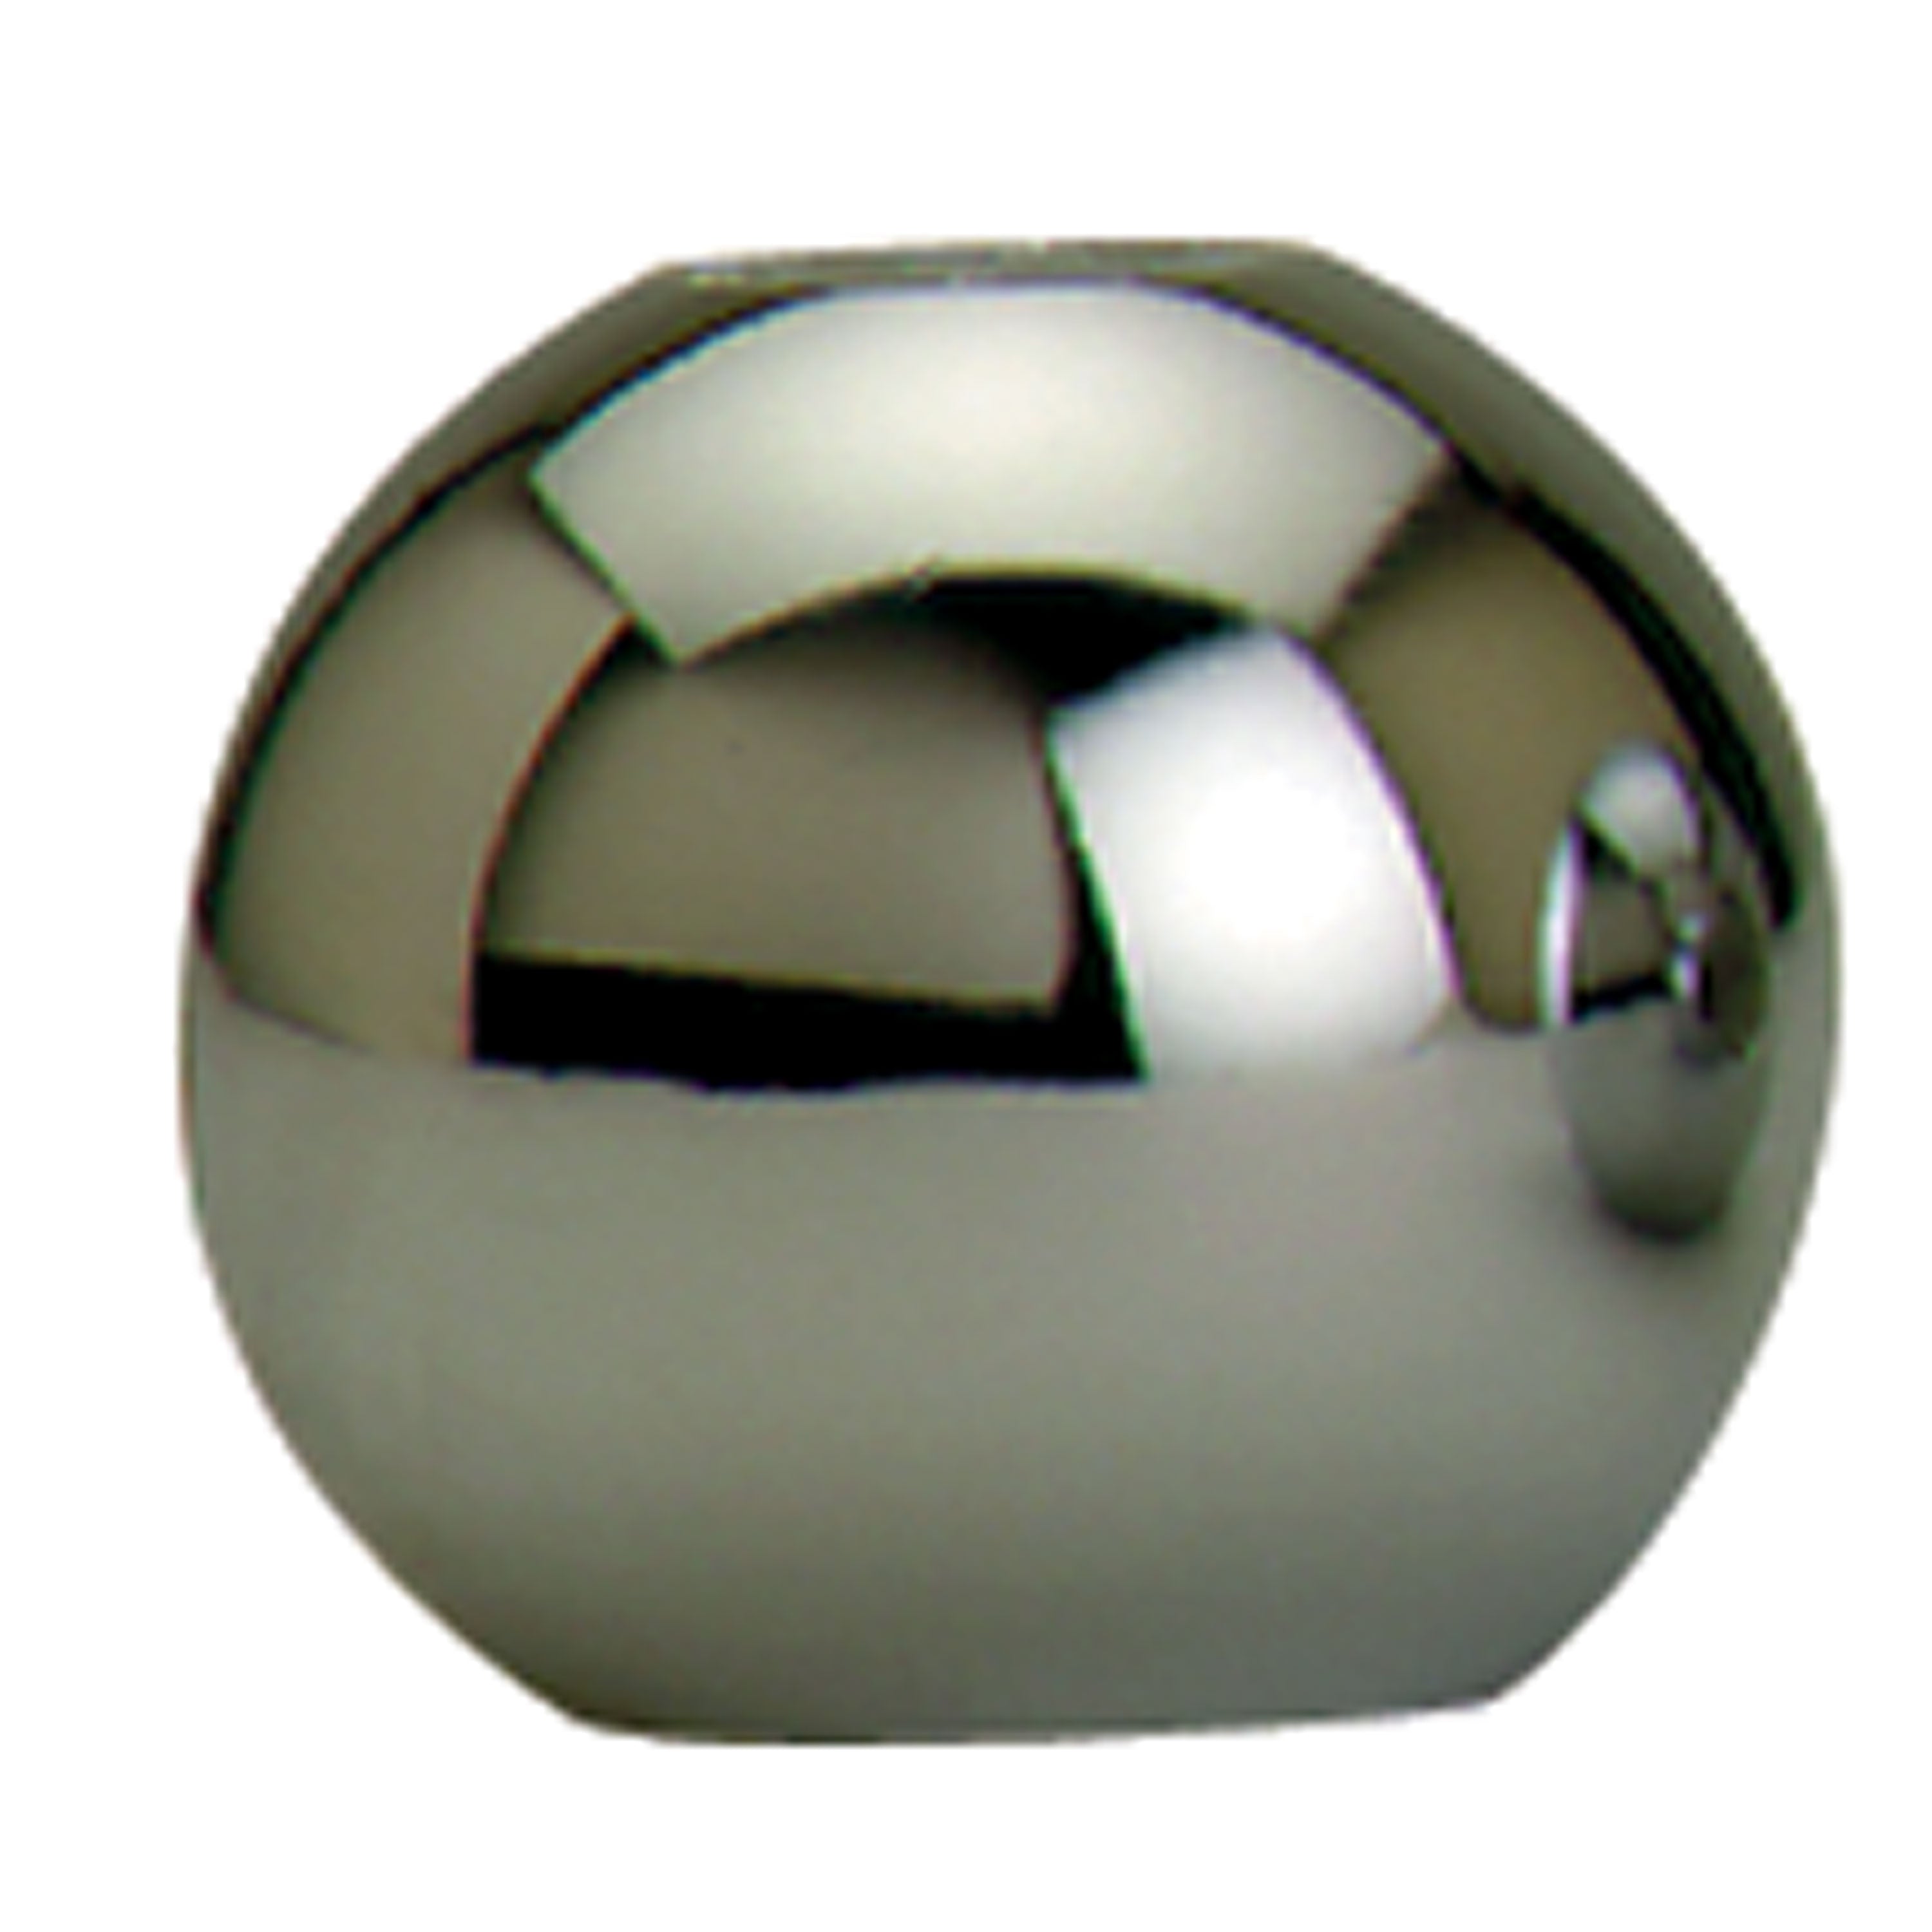 Convert-A-Ball 300B Nickel-Plated Replacement Ball - 1-7/8"